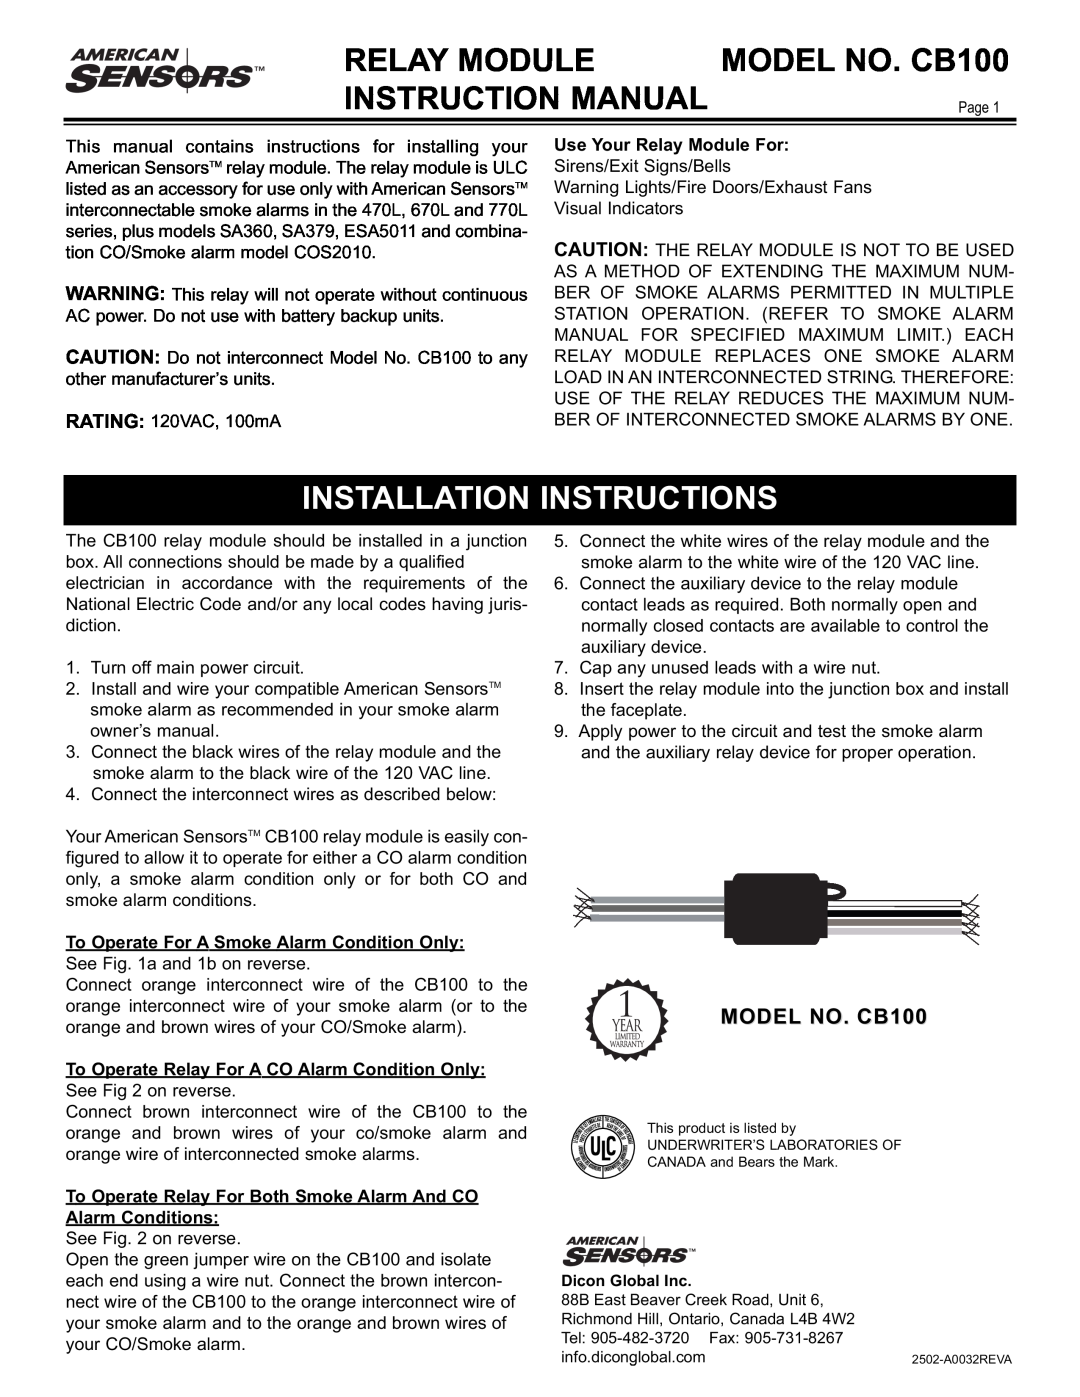 American Sensor installation instructions Relay Module, MODEL NO. CB100, Instruction Manual, Installation Instructions 